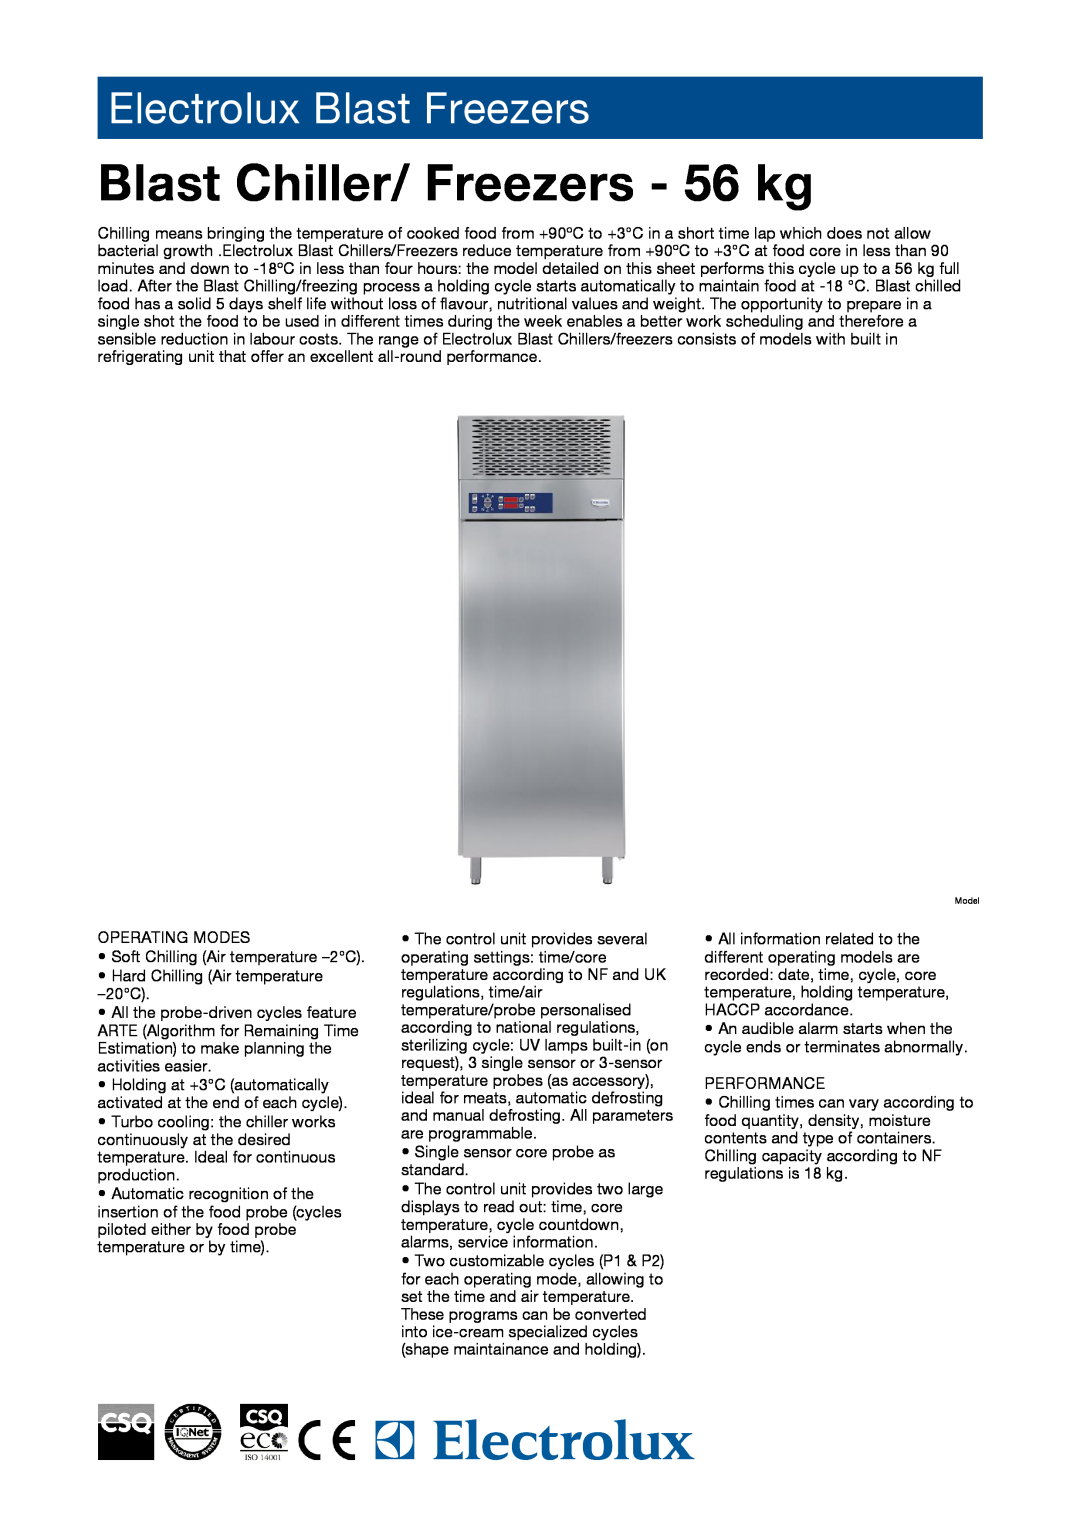 Electrolux 727133, 726630, RBF2016 manual Blast Chiller/ Freezers - 56 kg, Electrolux Blast Freezers 